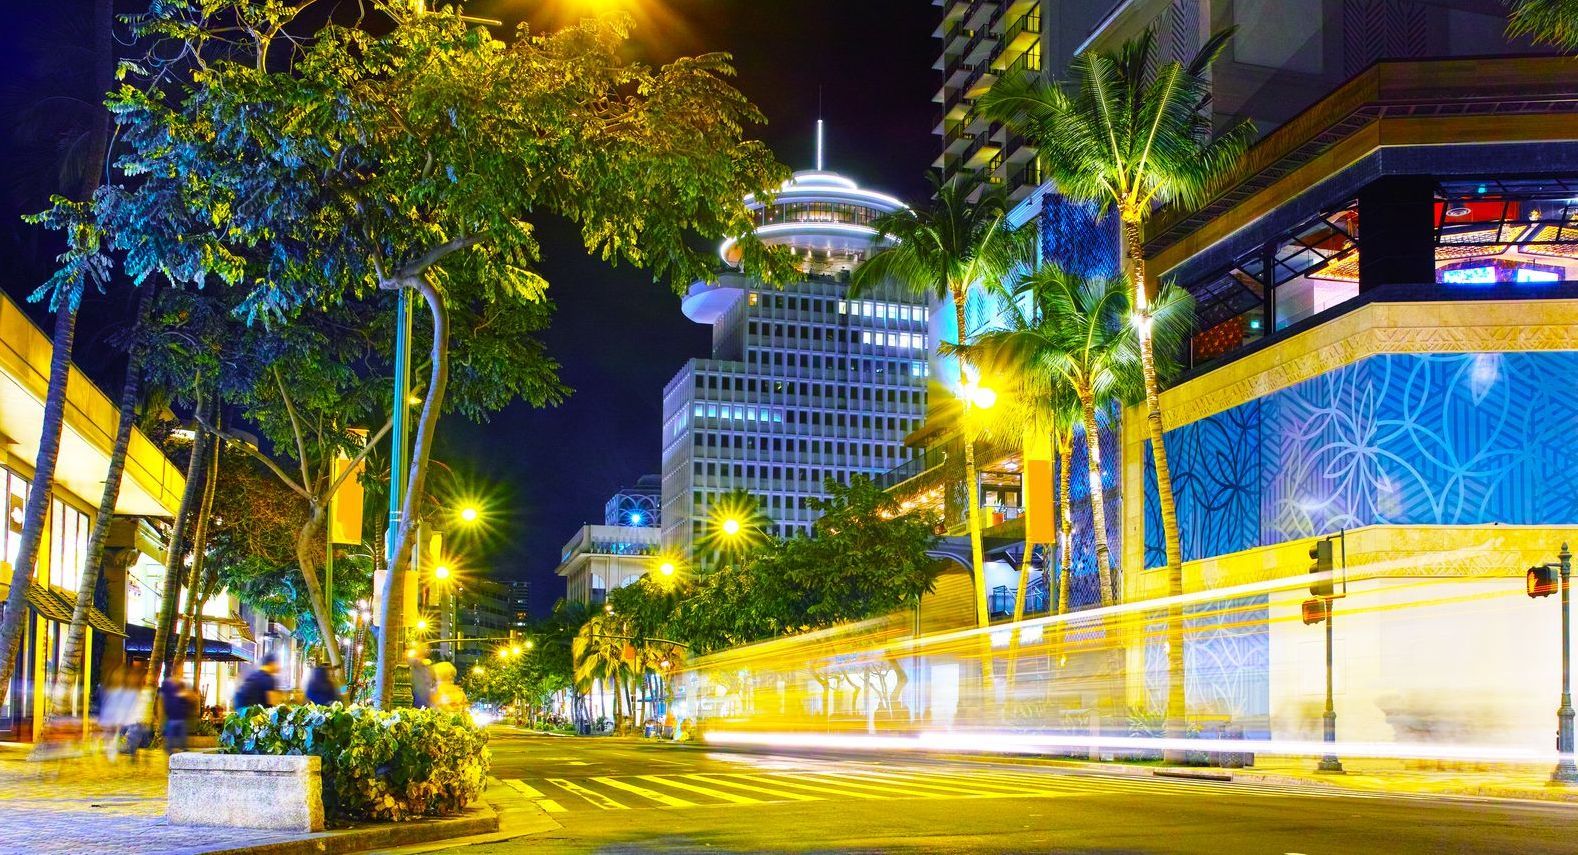 Night view of main street Hawaii, Waikiki where economic nexus is used